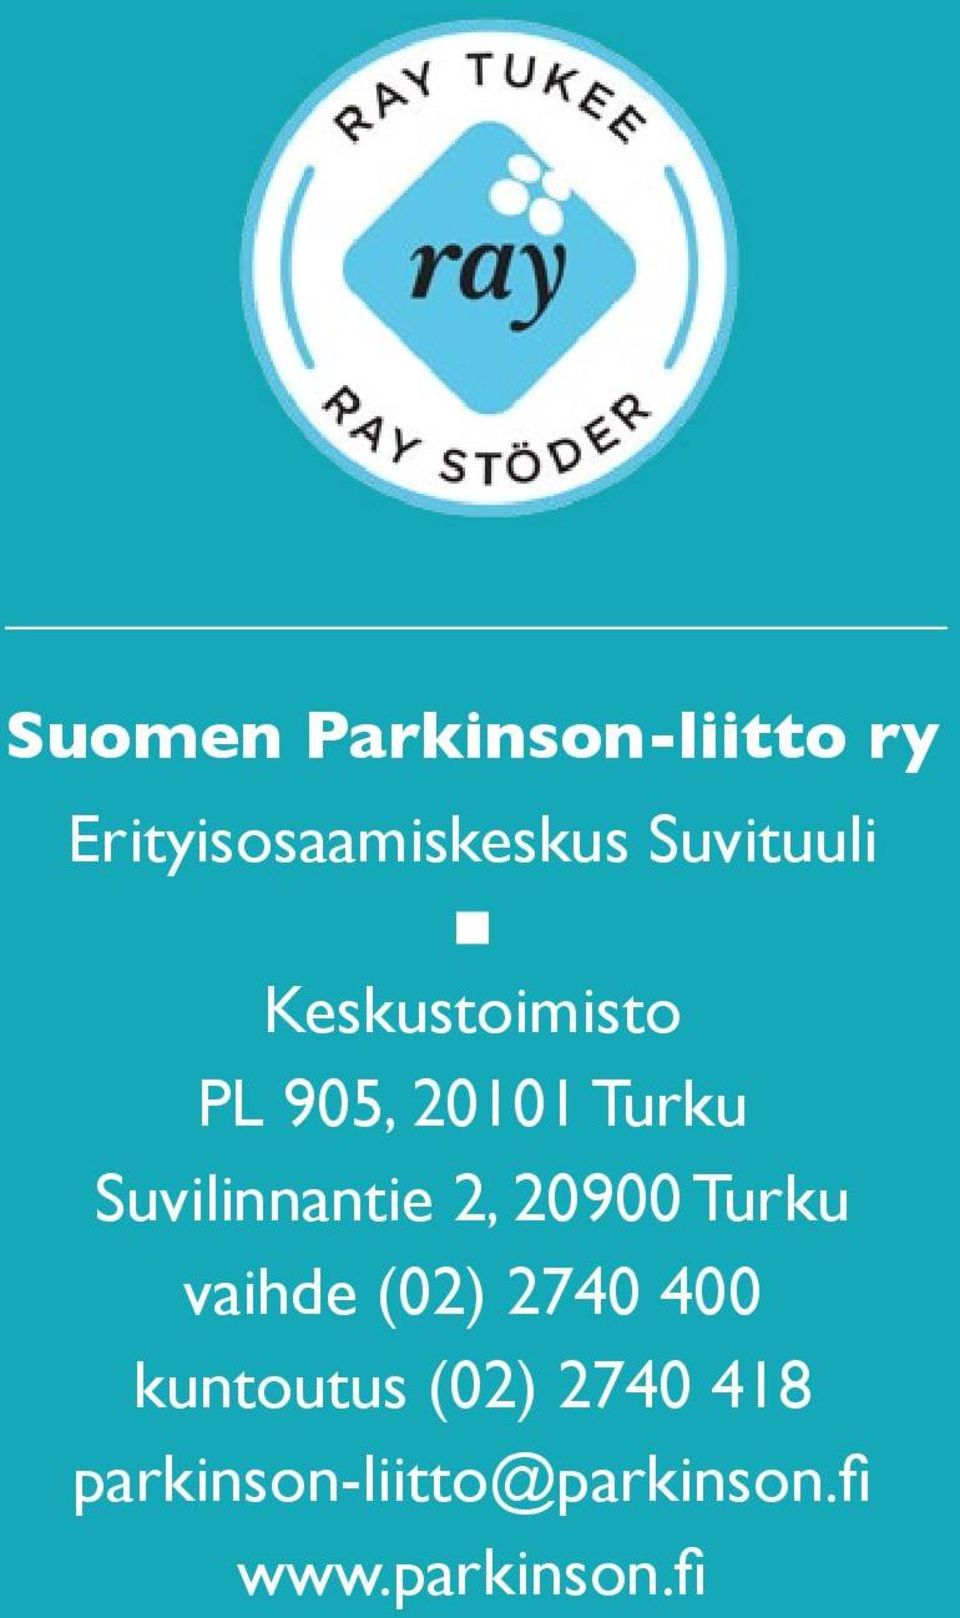 Suvilinnantie 2, 20900 Turku vaihde (02) 2740 400